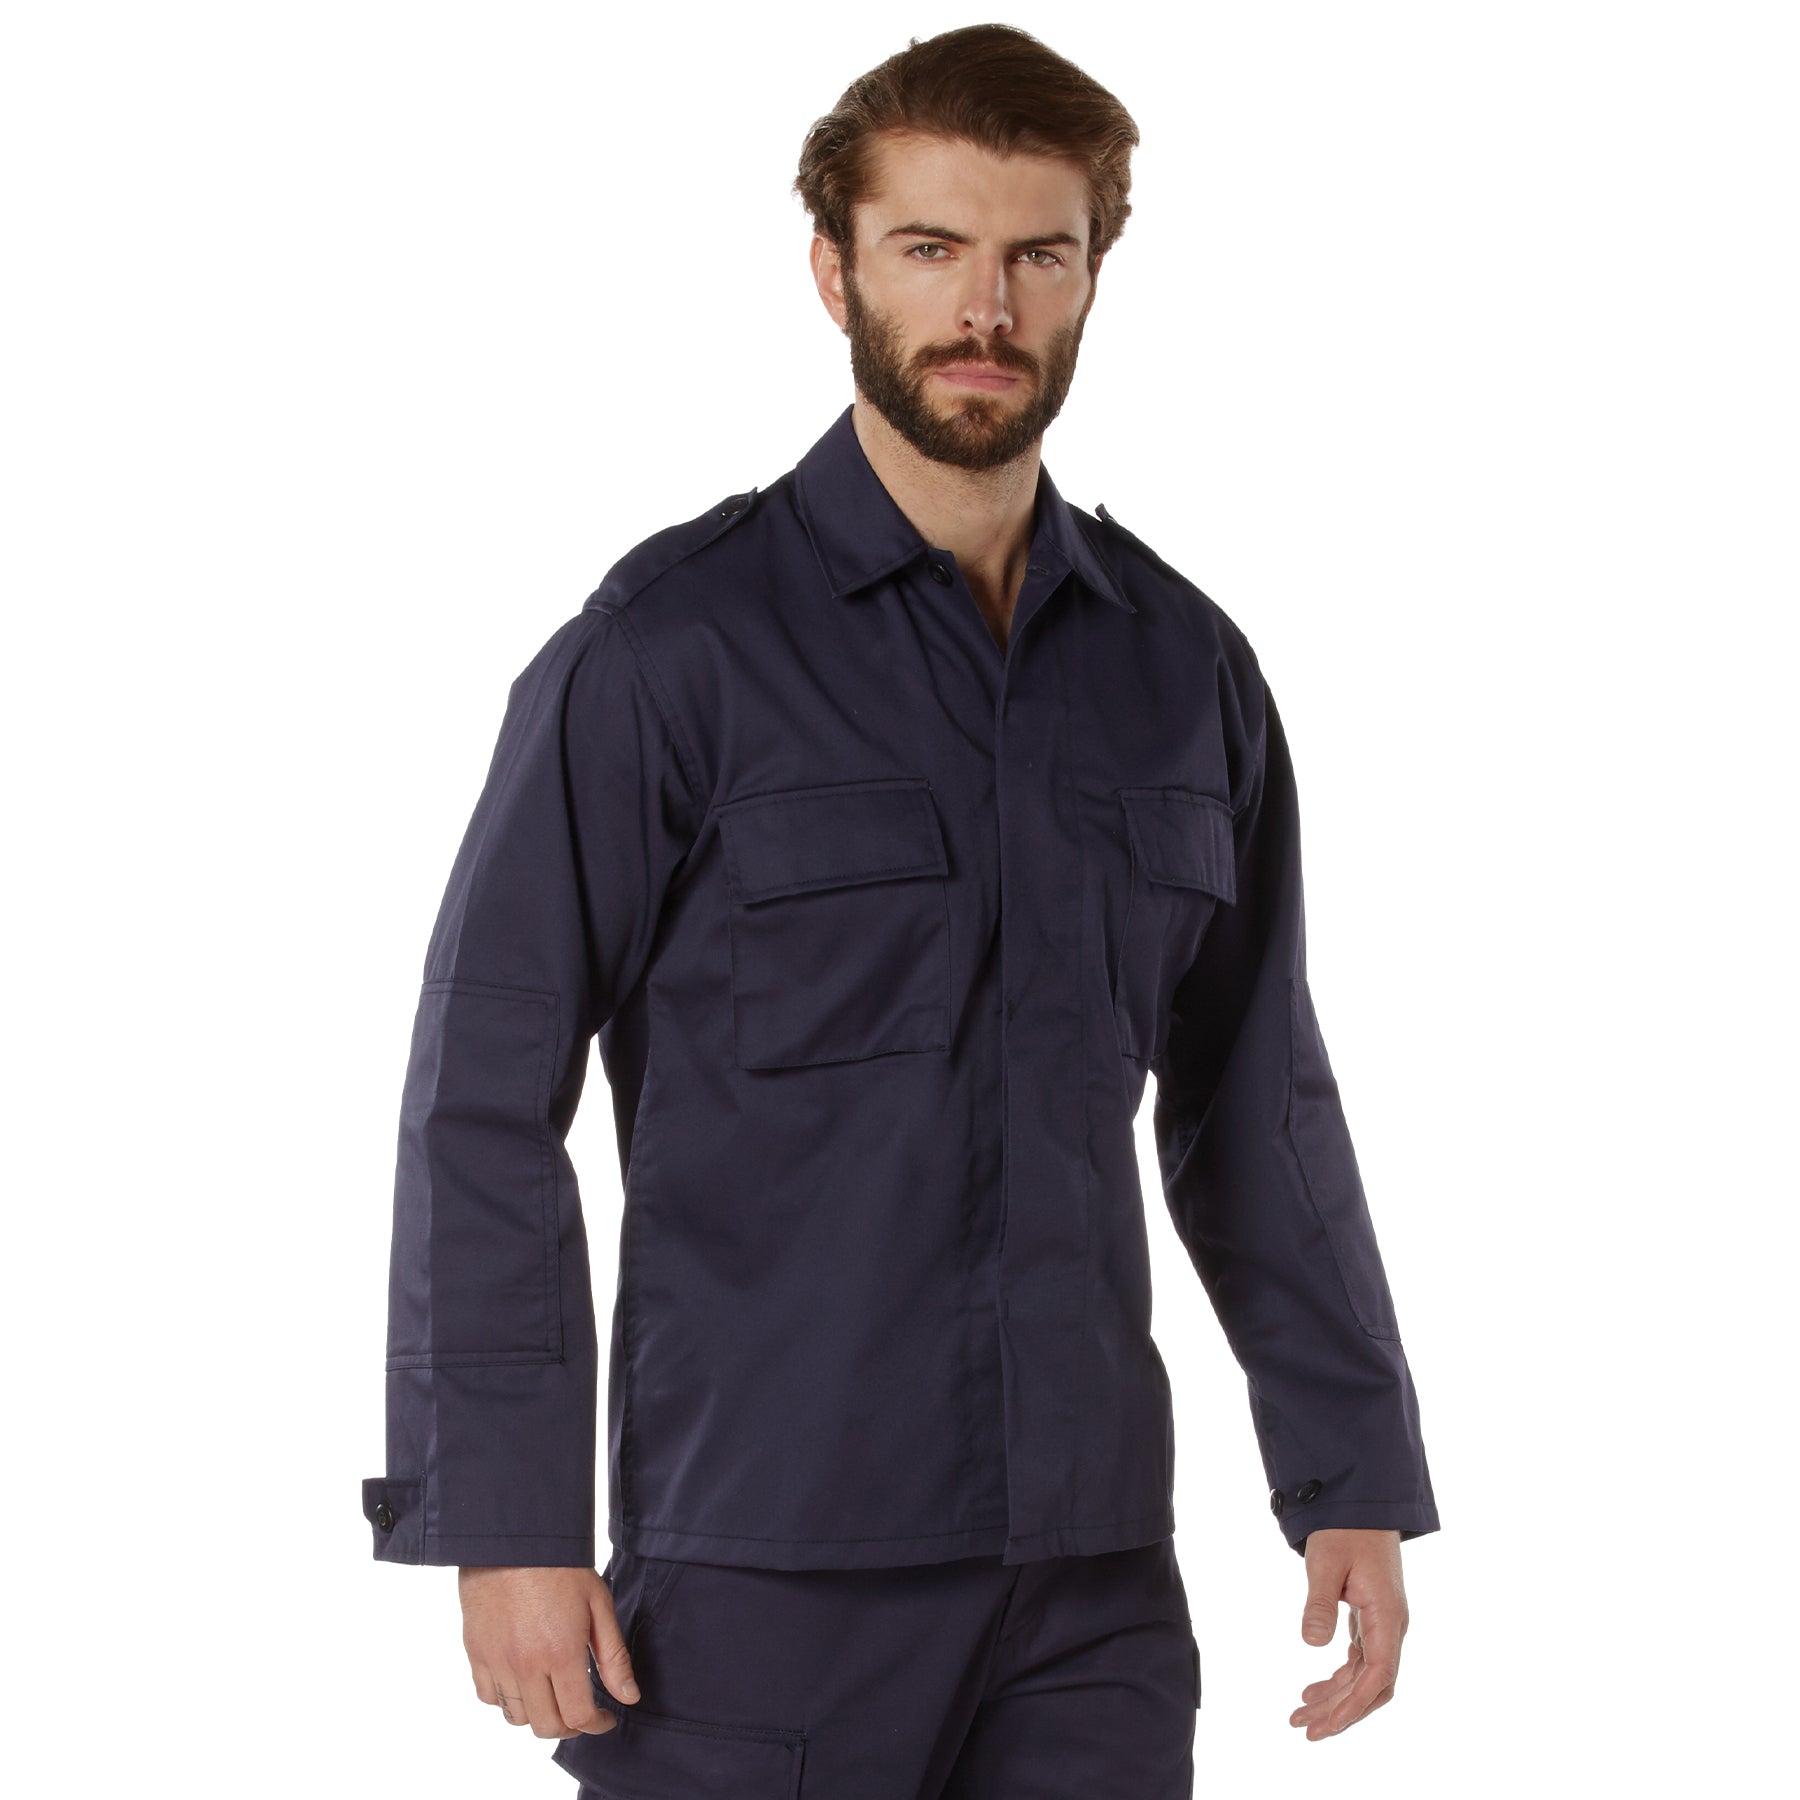 Poly/Cotton 2-Pocket Tactical BDU Shirts Navy Blue